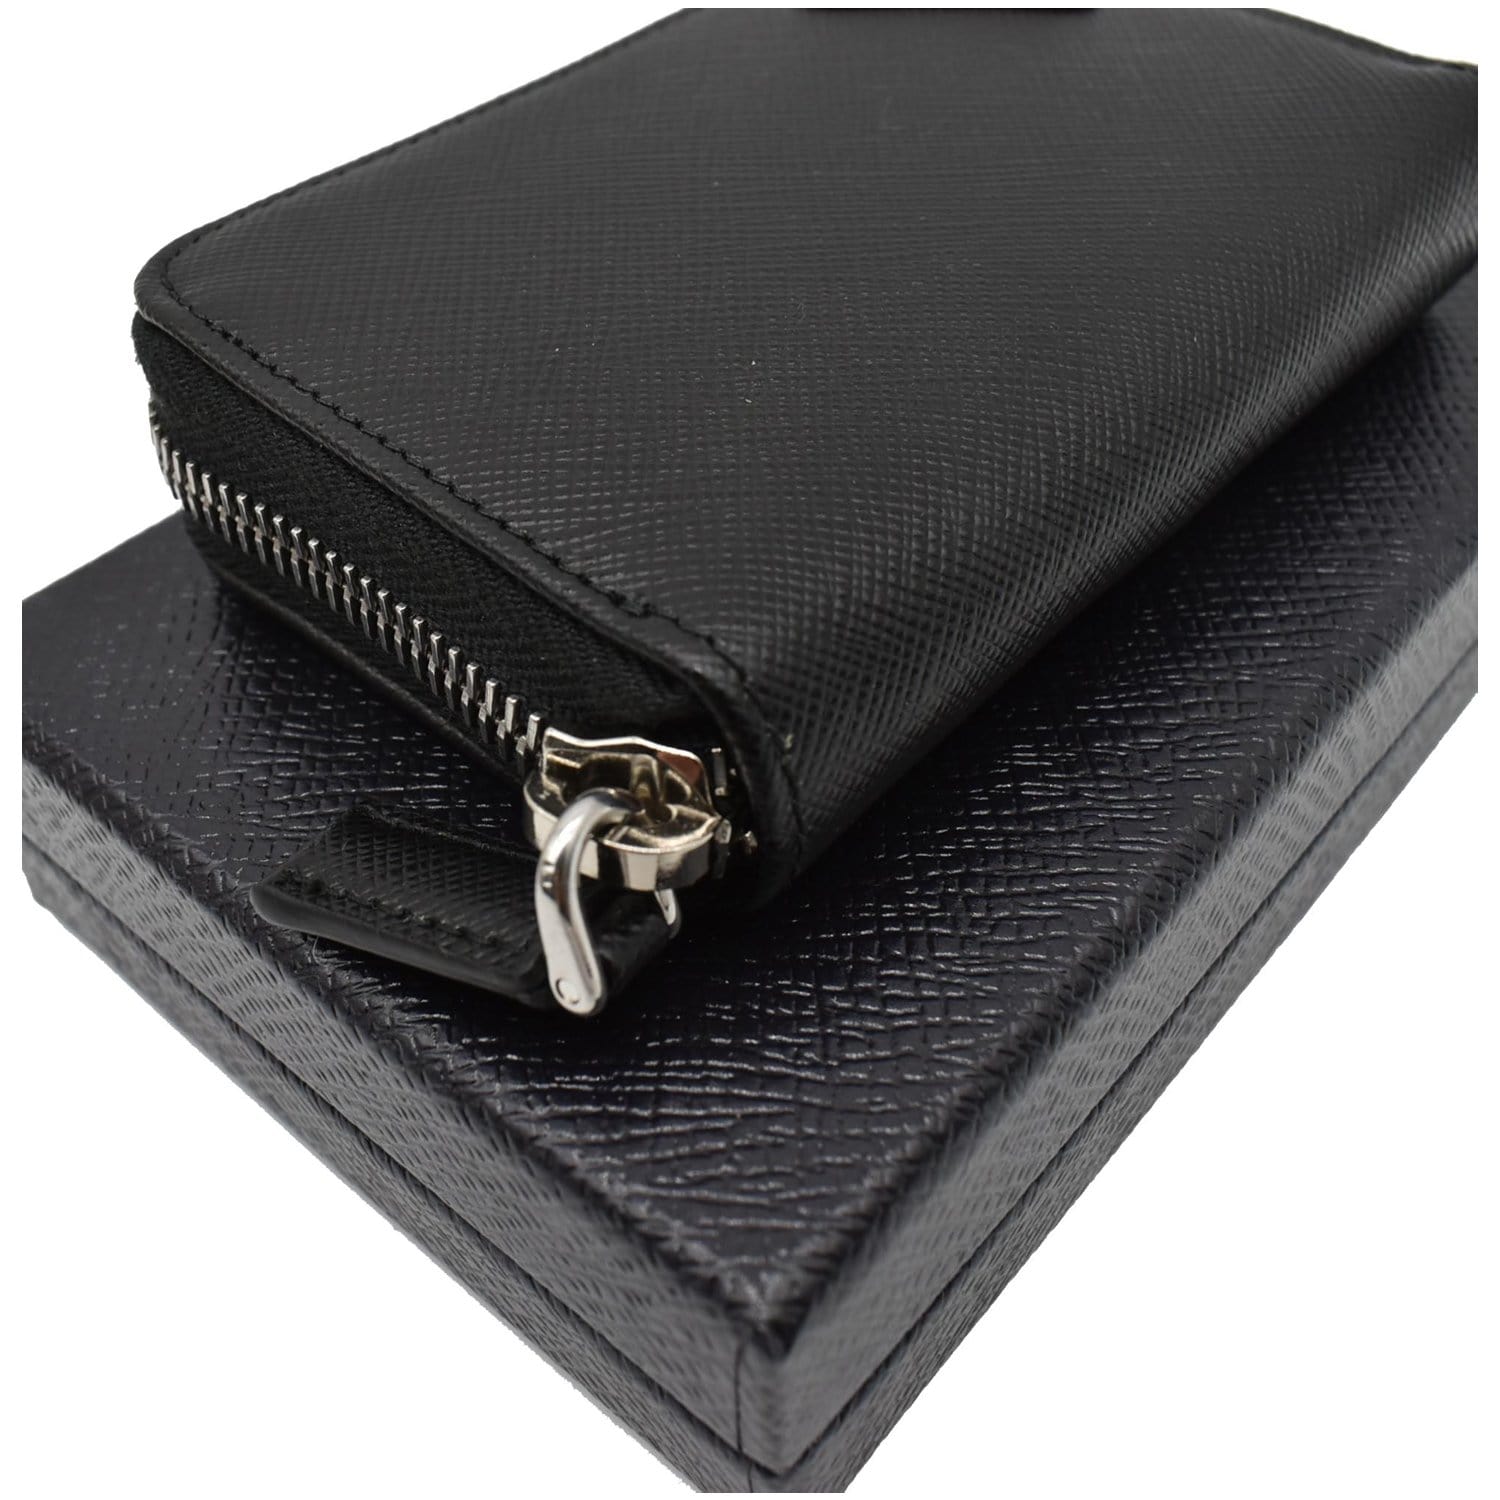 Prada Saffiano Leather Card Holder, Women, Black